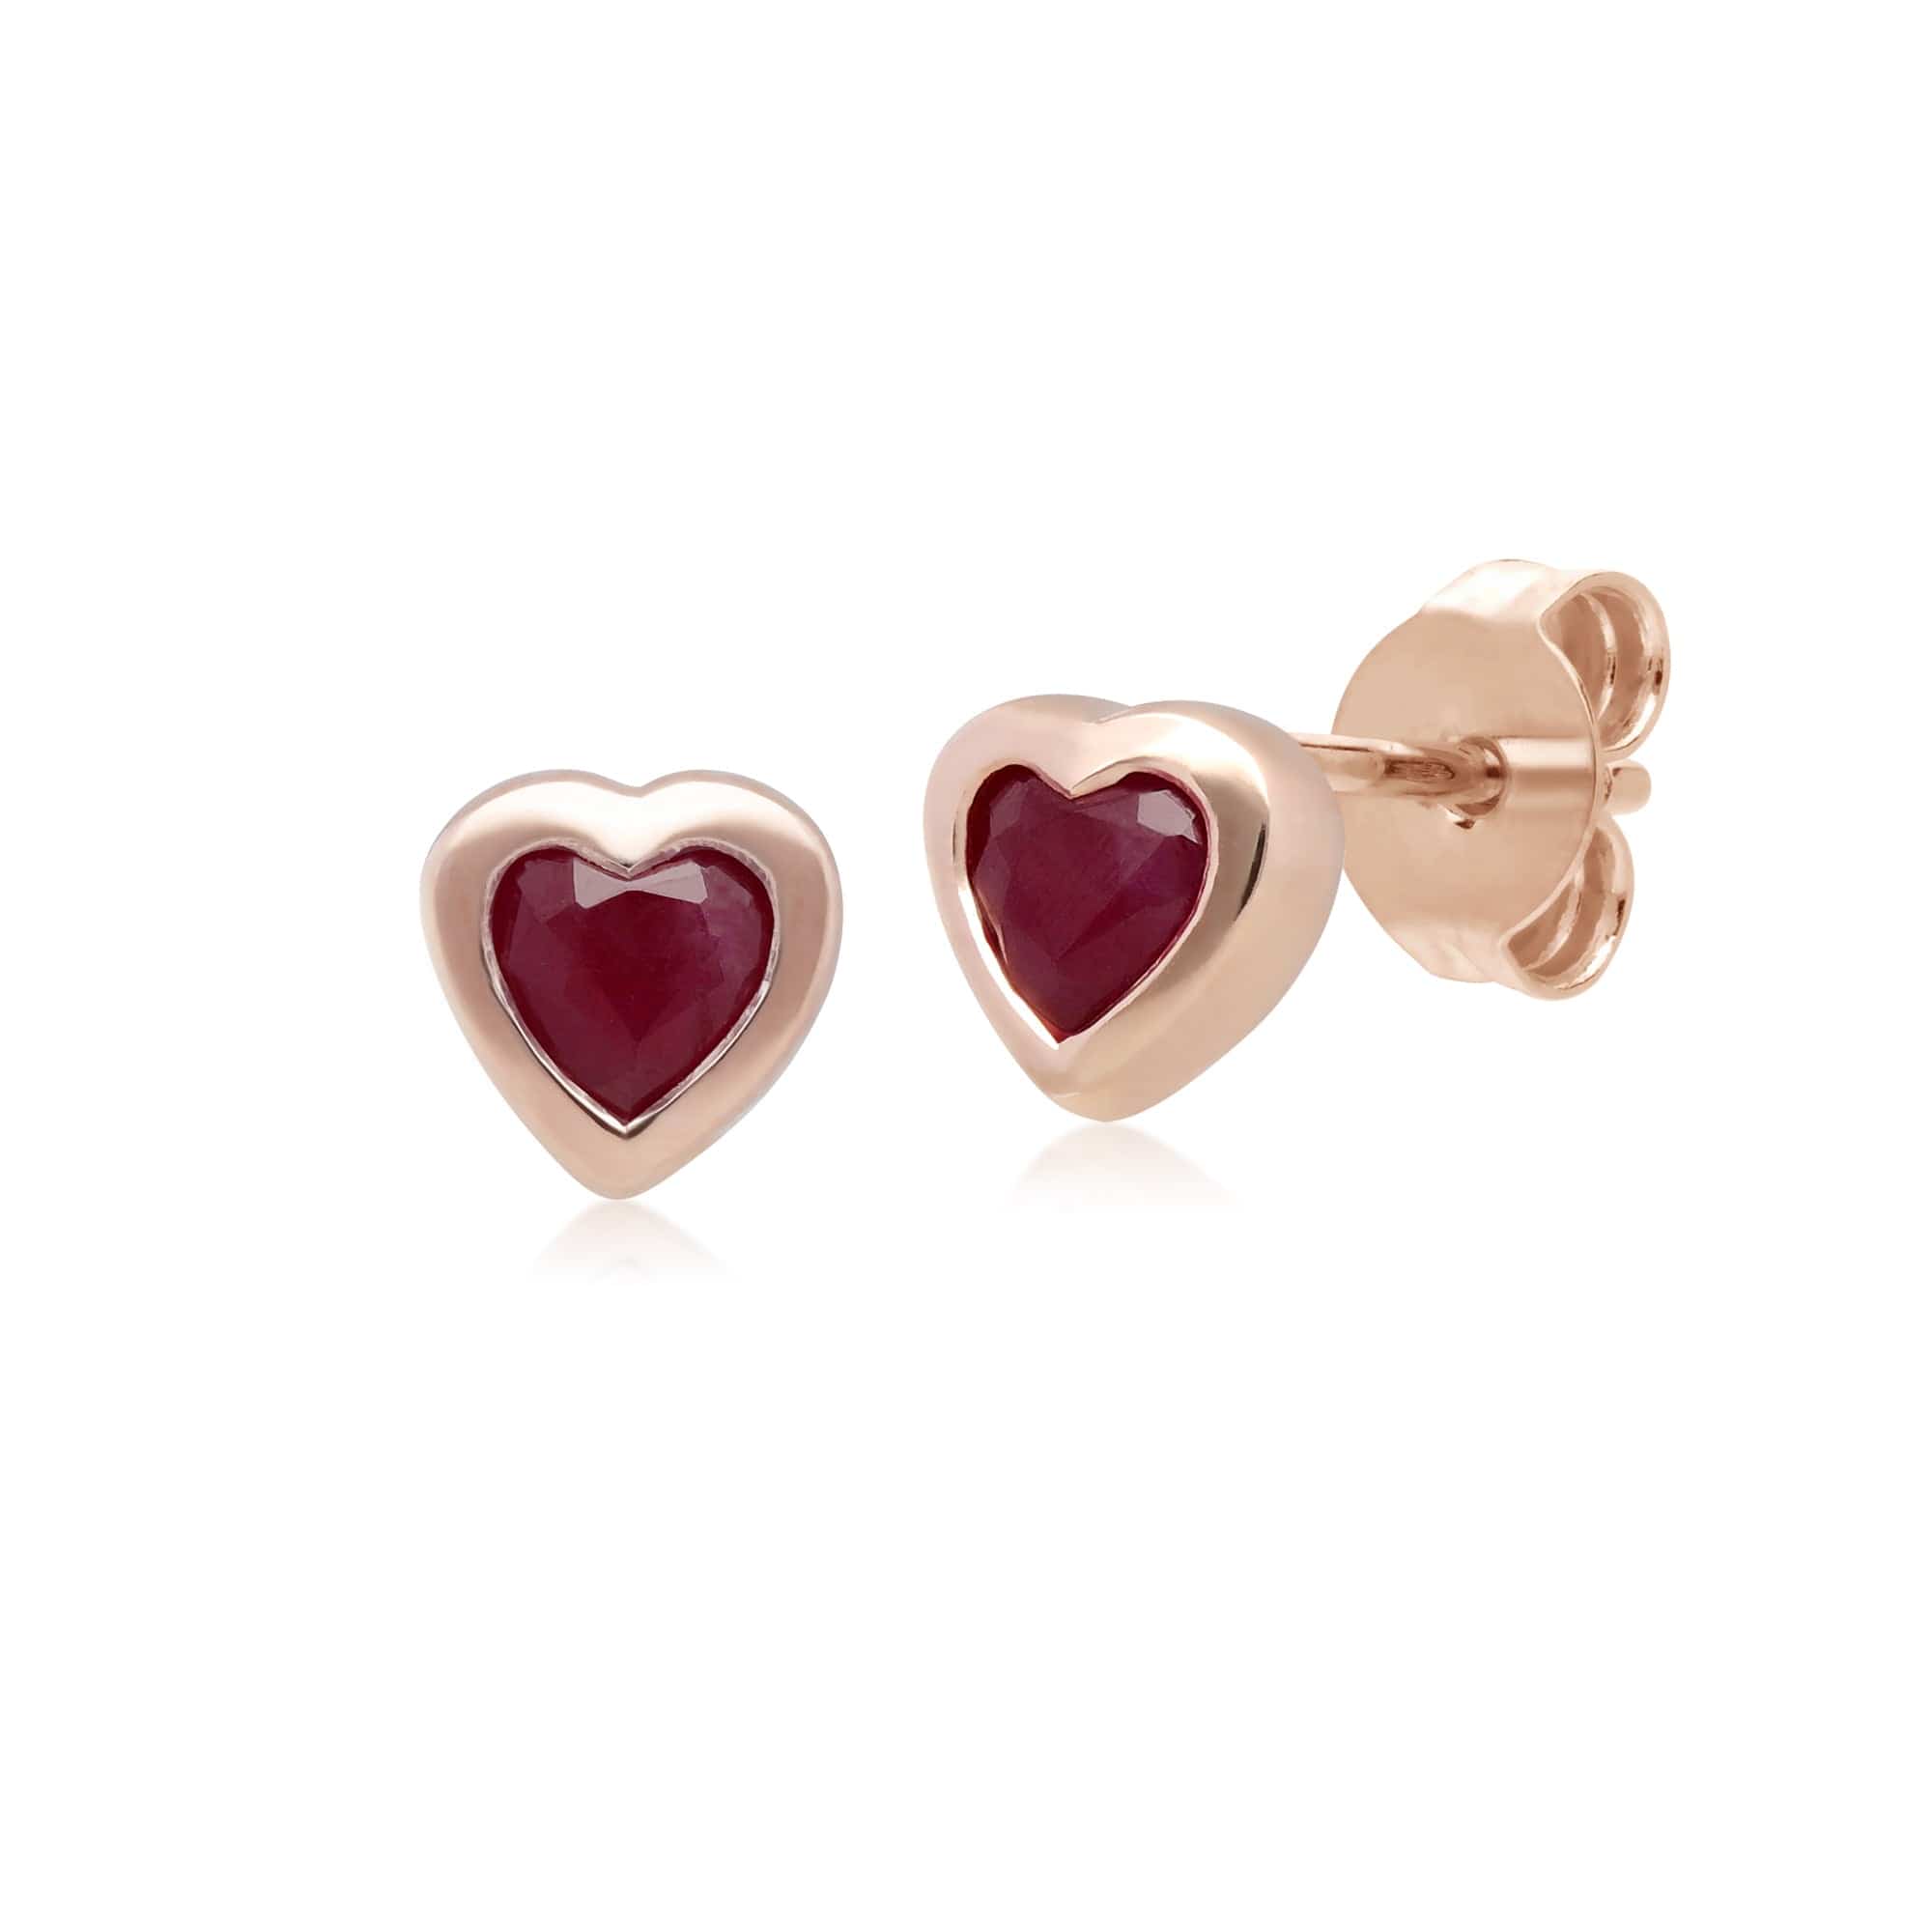 Classic Ruby Heart Stud Earrings in 9ct Rose Gold - Gemondo